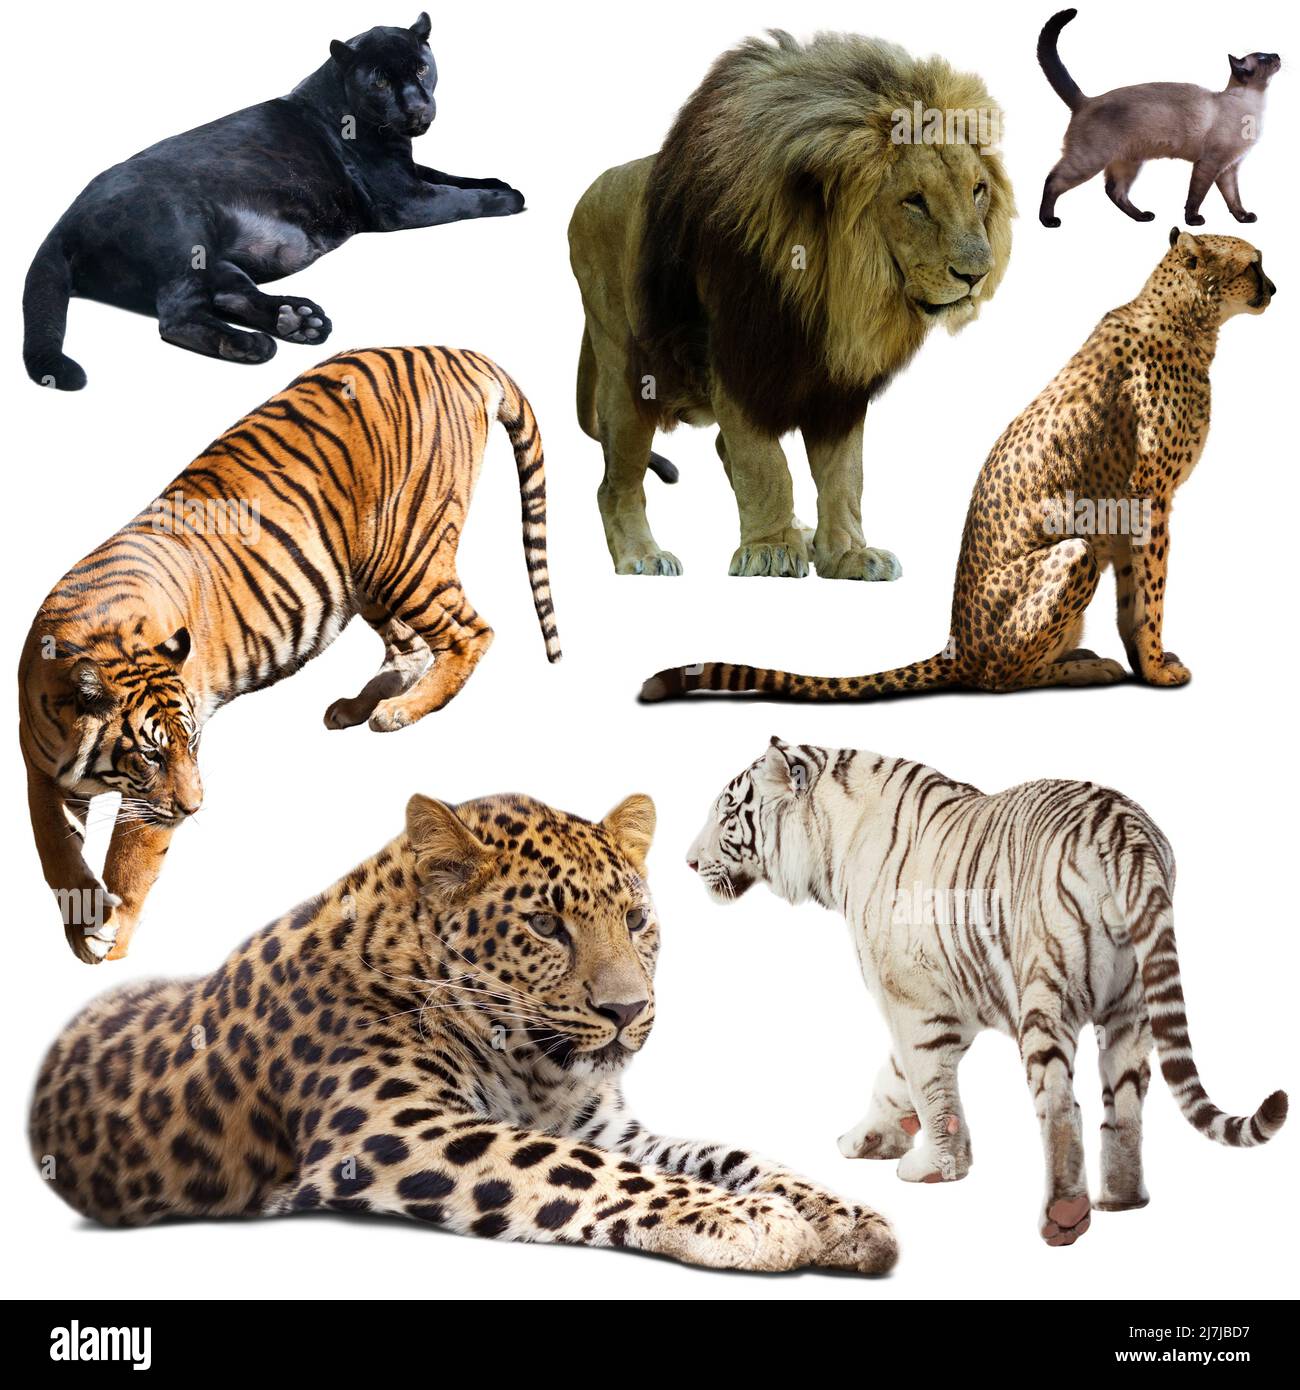 Set of wild mammals animals from cat family isolated Stock Photo